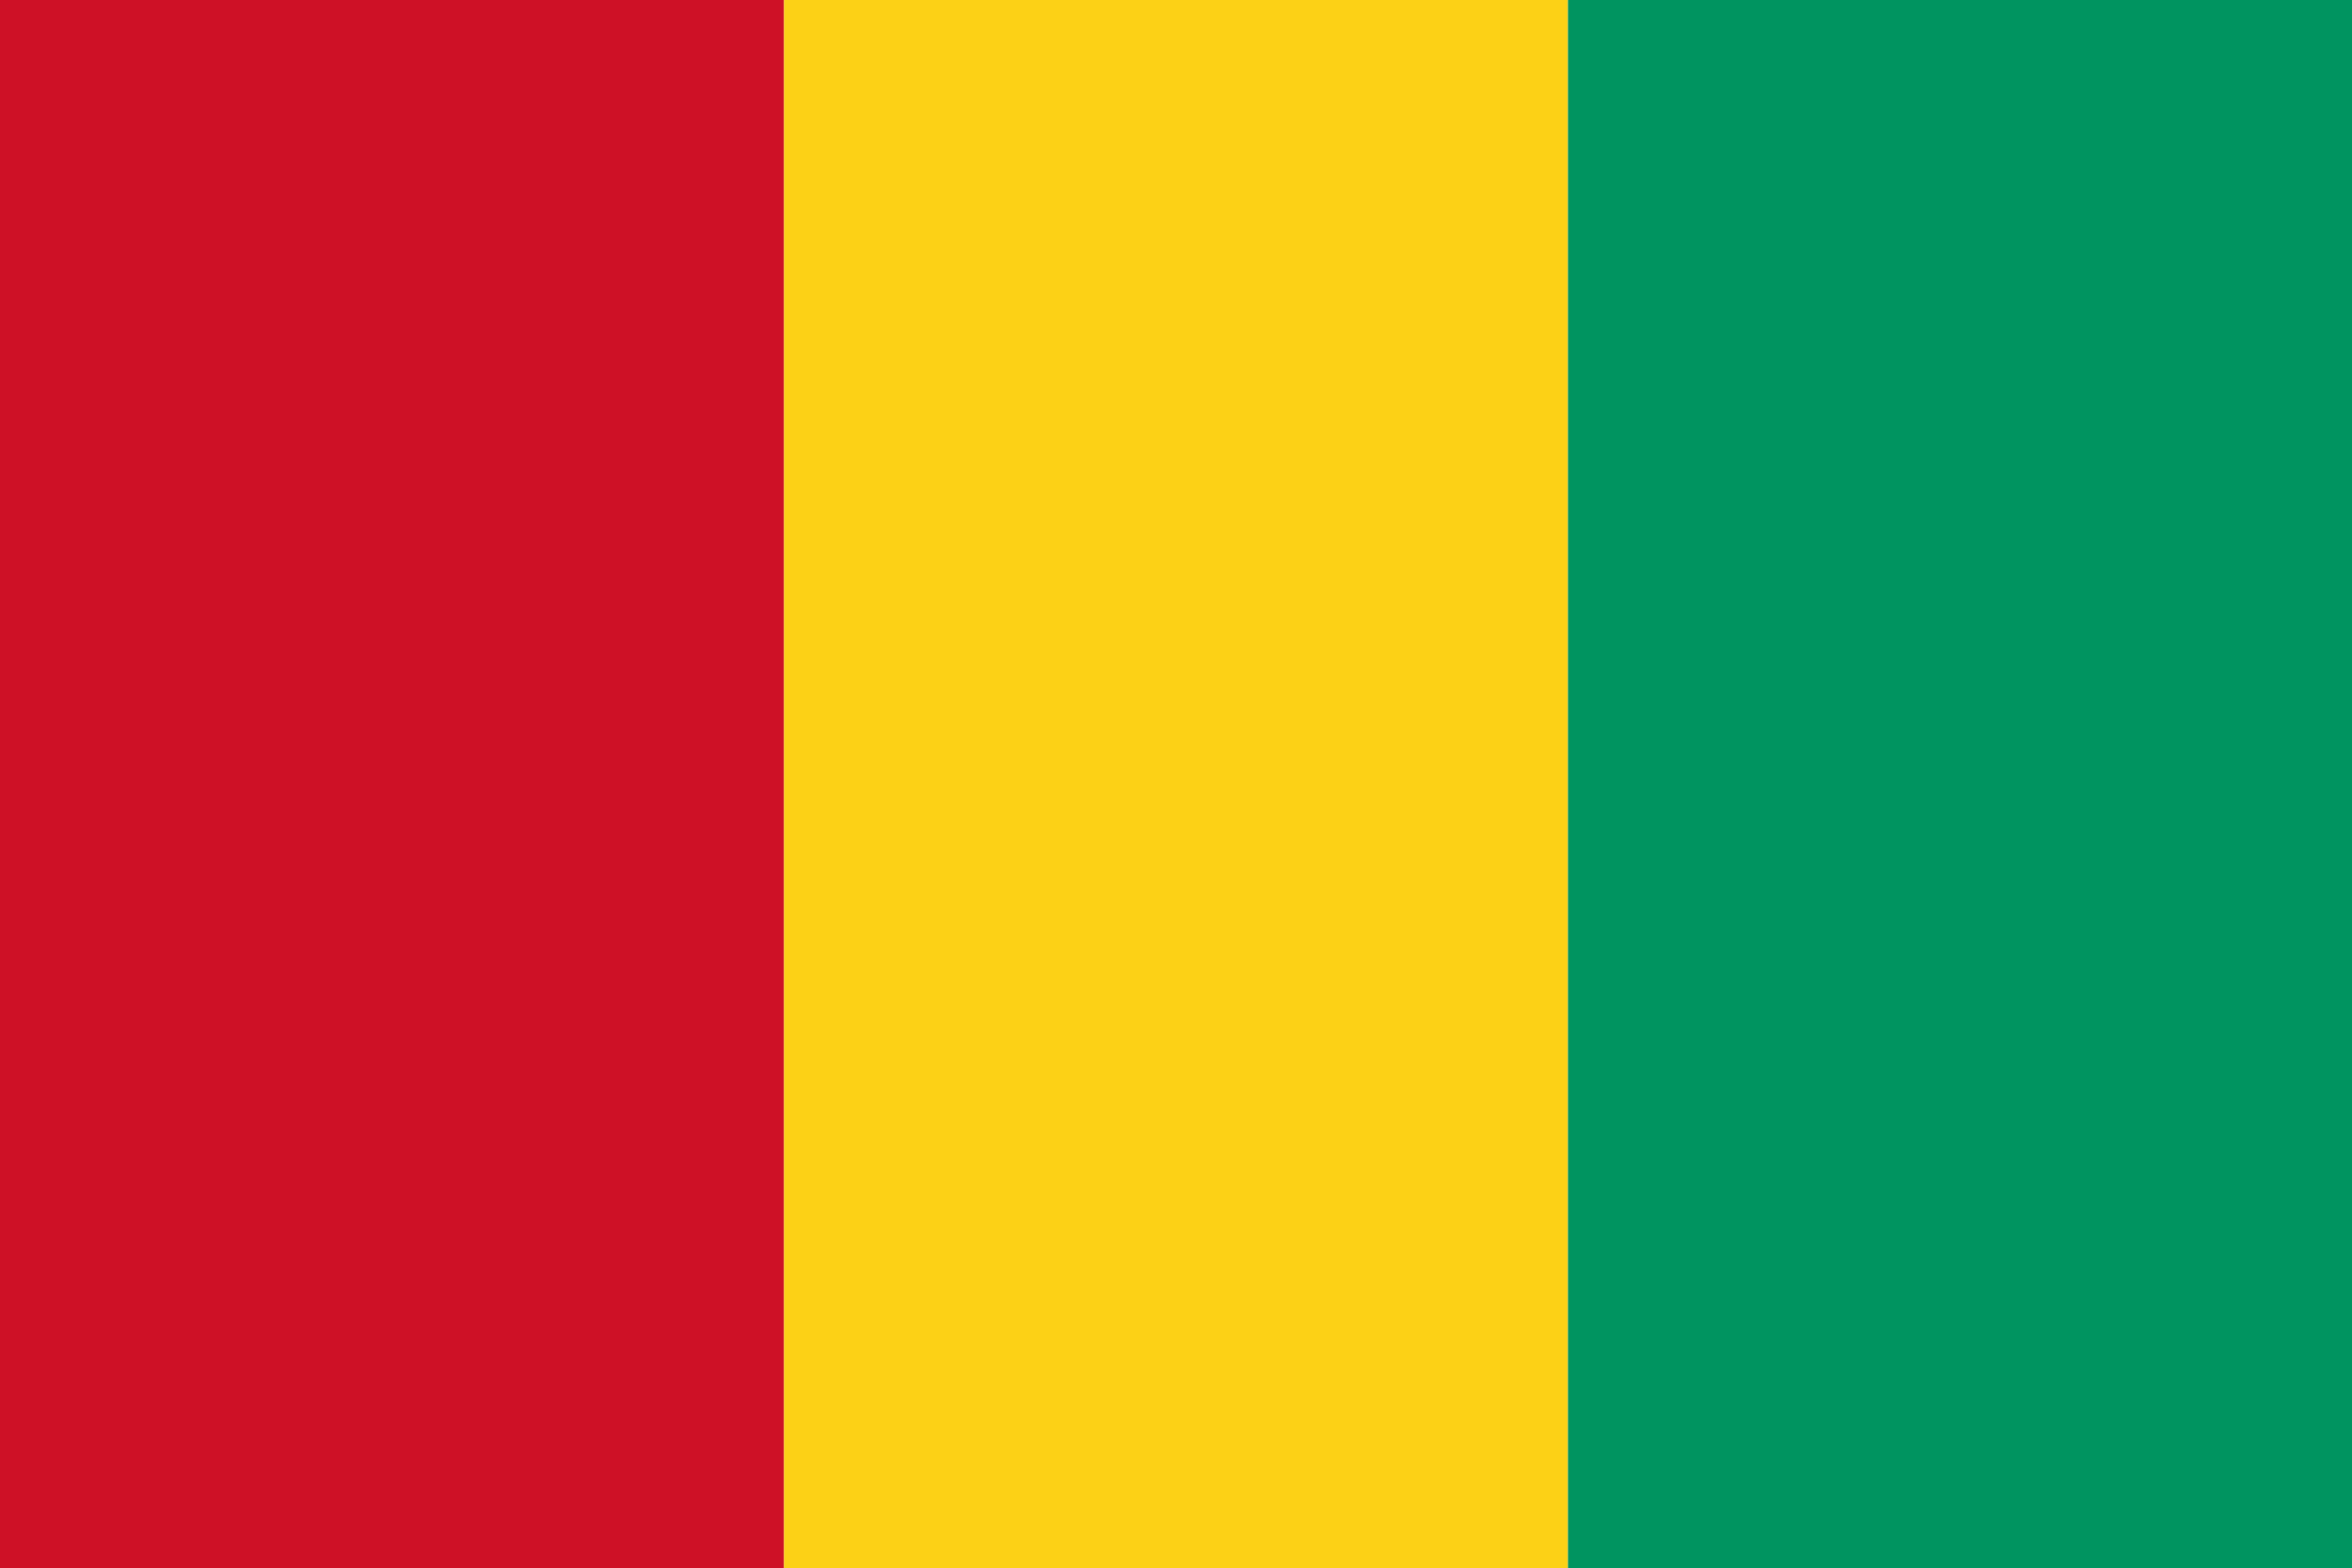 Guinea's flag